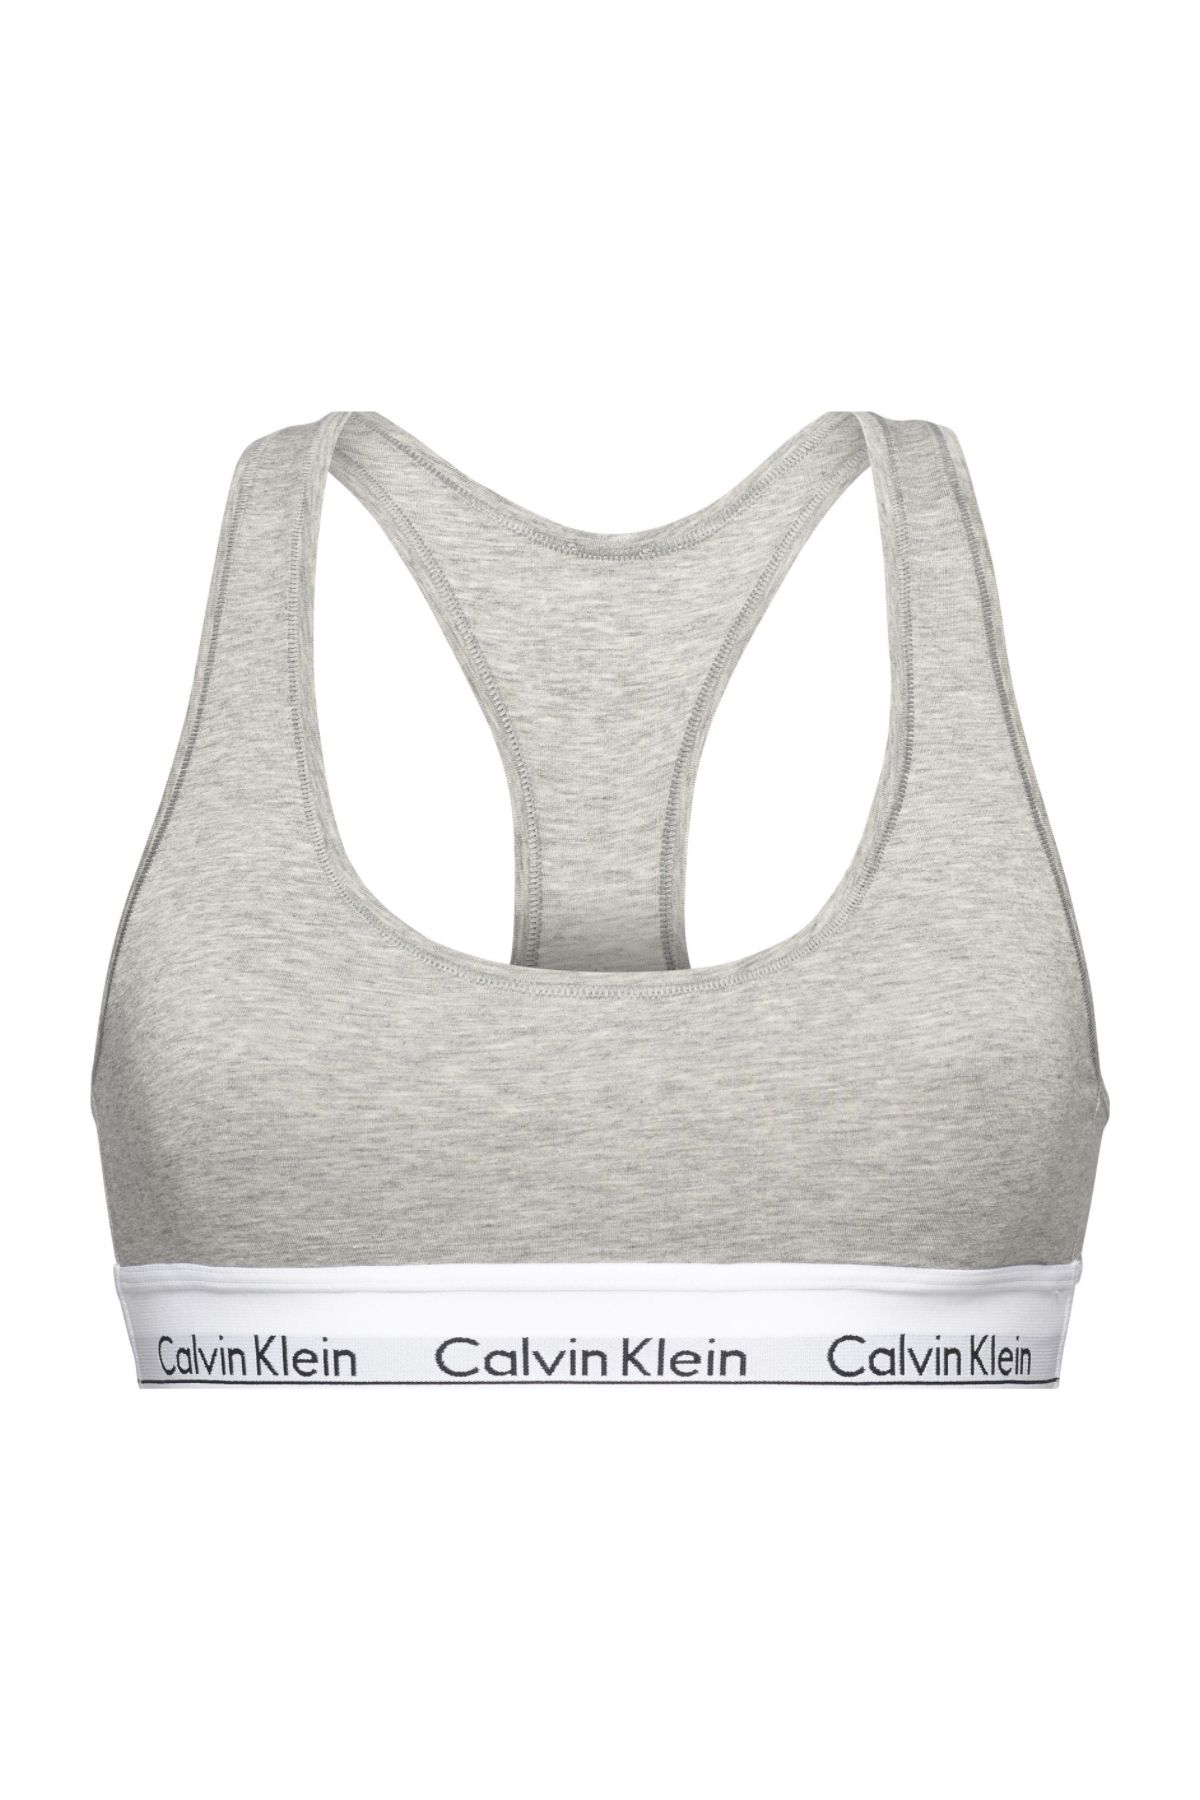 Calvin Klein Women's Brand Logo Elastic Band Gray Sports Bra